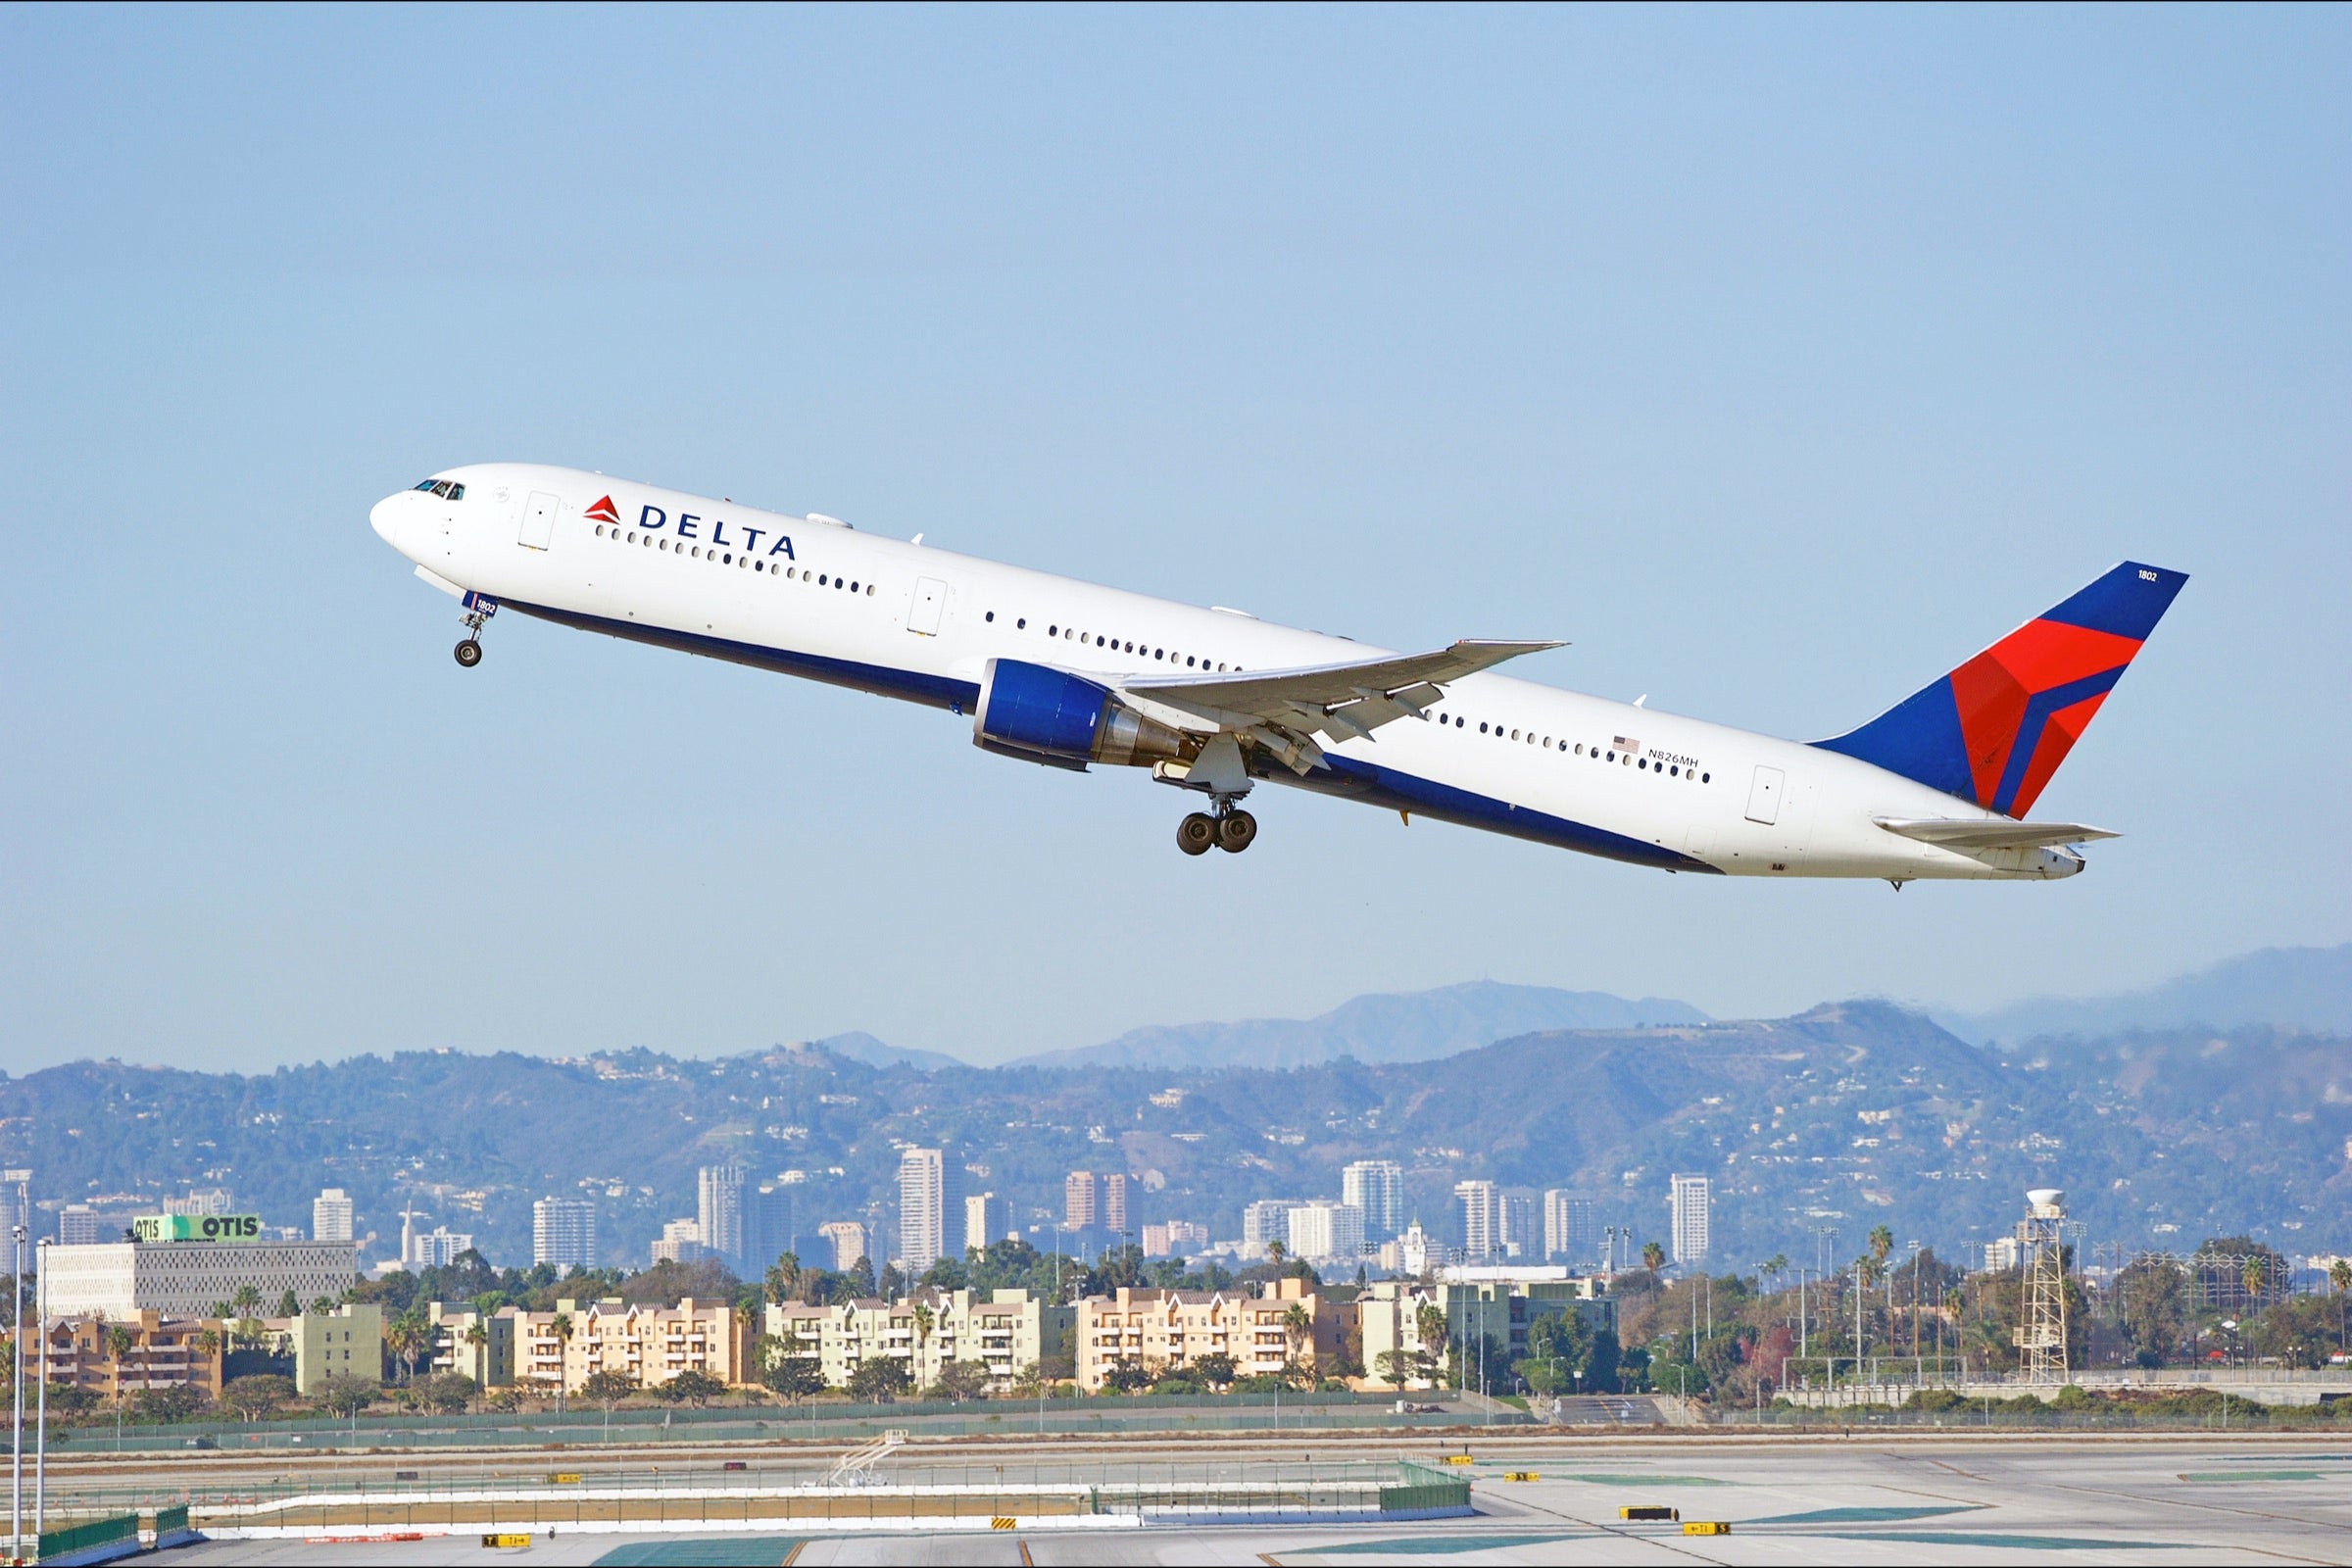 Delta 767 taking off in Los Angeles